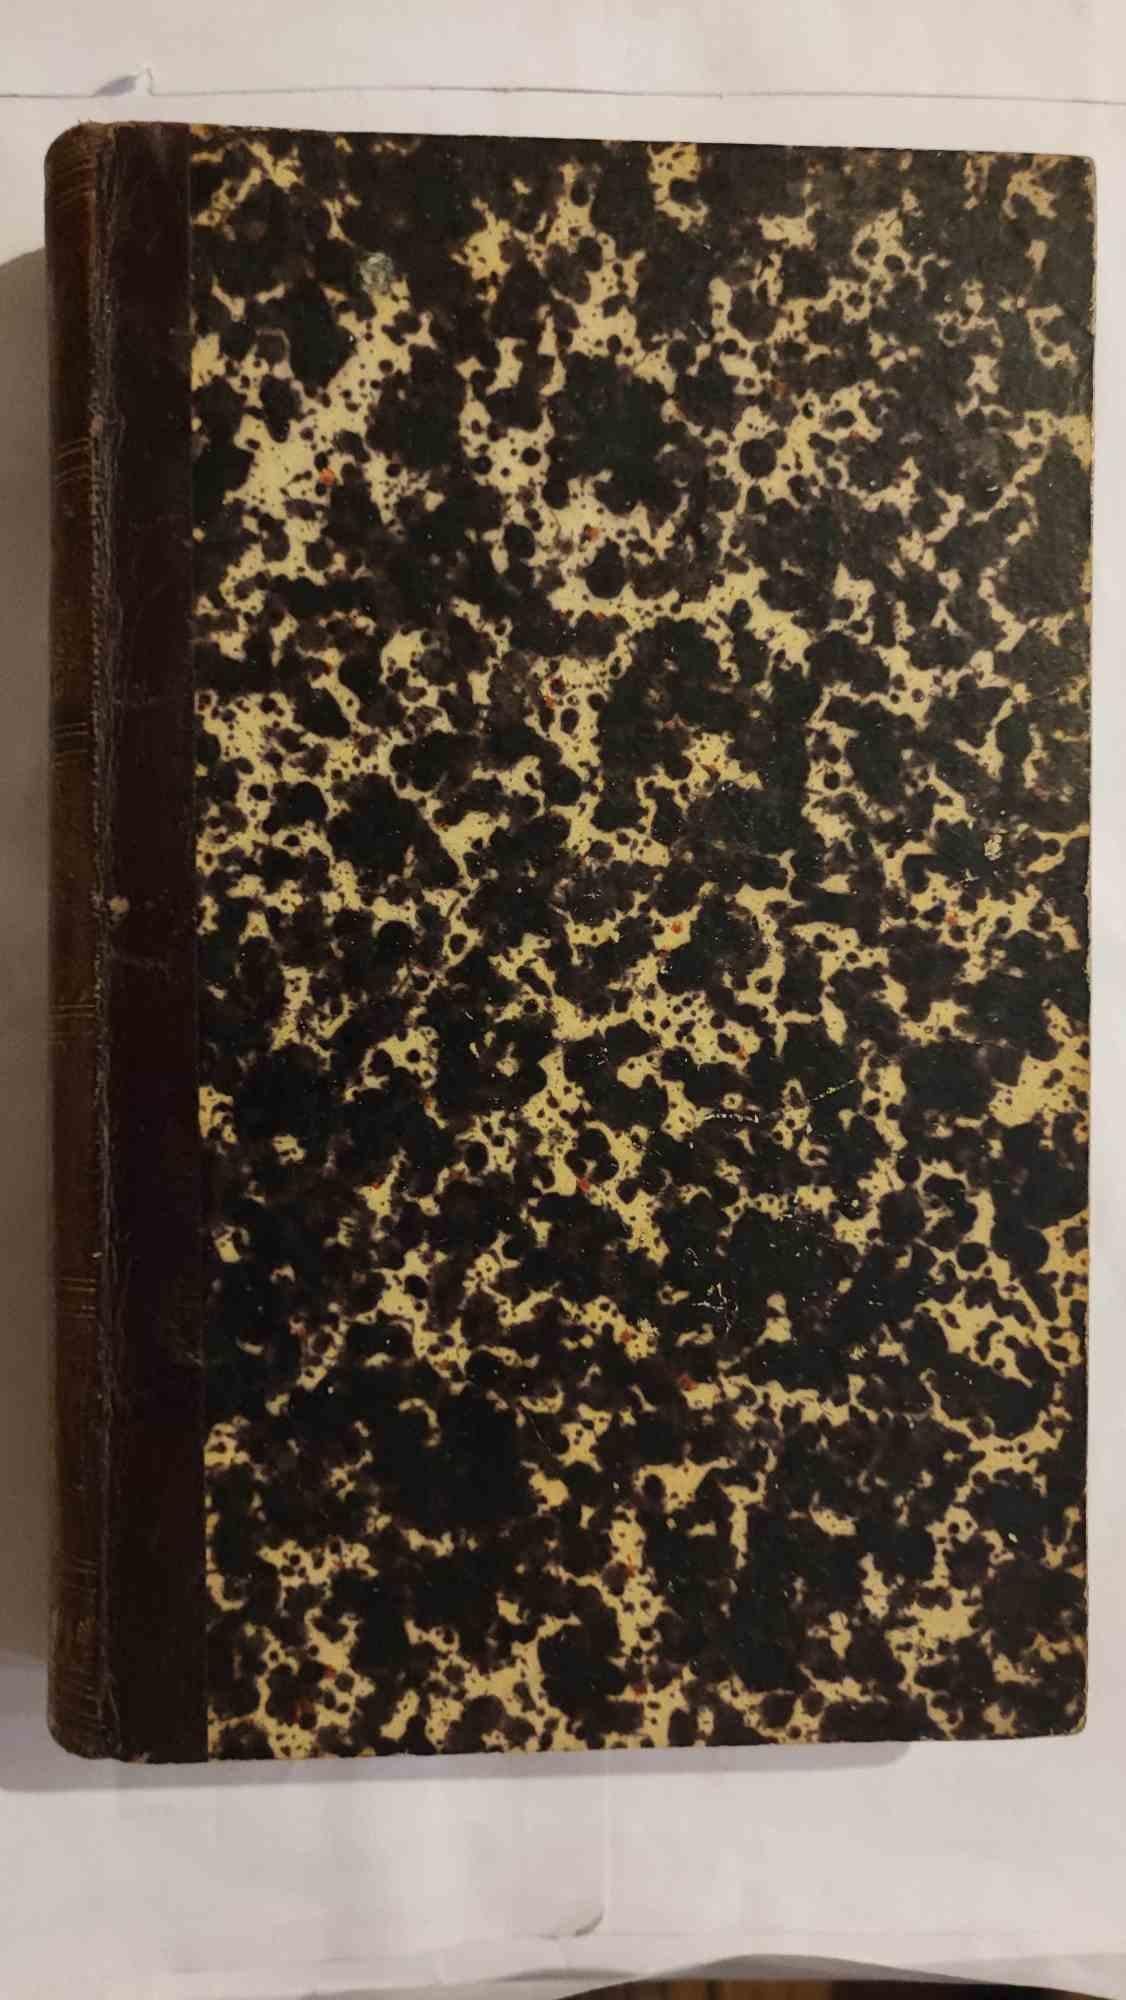 Les Misérables - Rare Book by Victor Hugo - 1862 For Sale 4